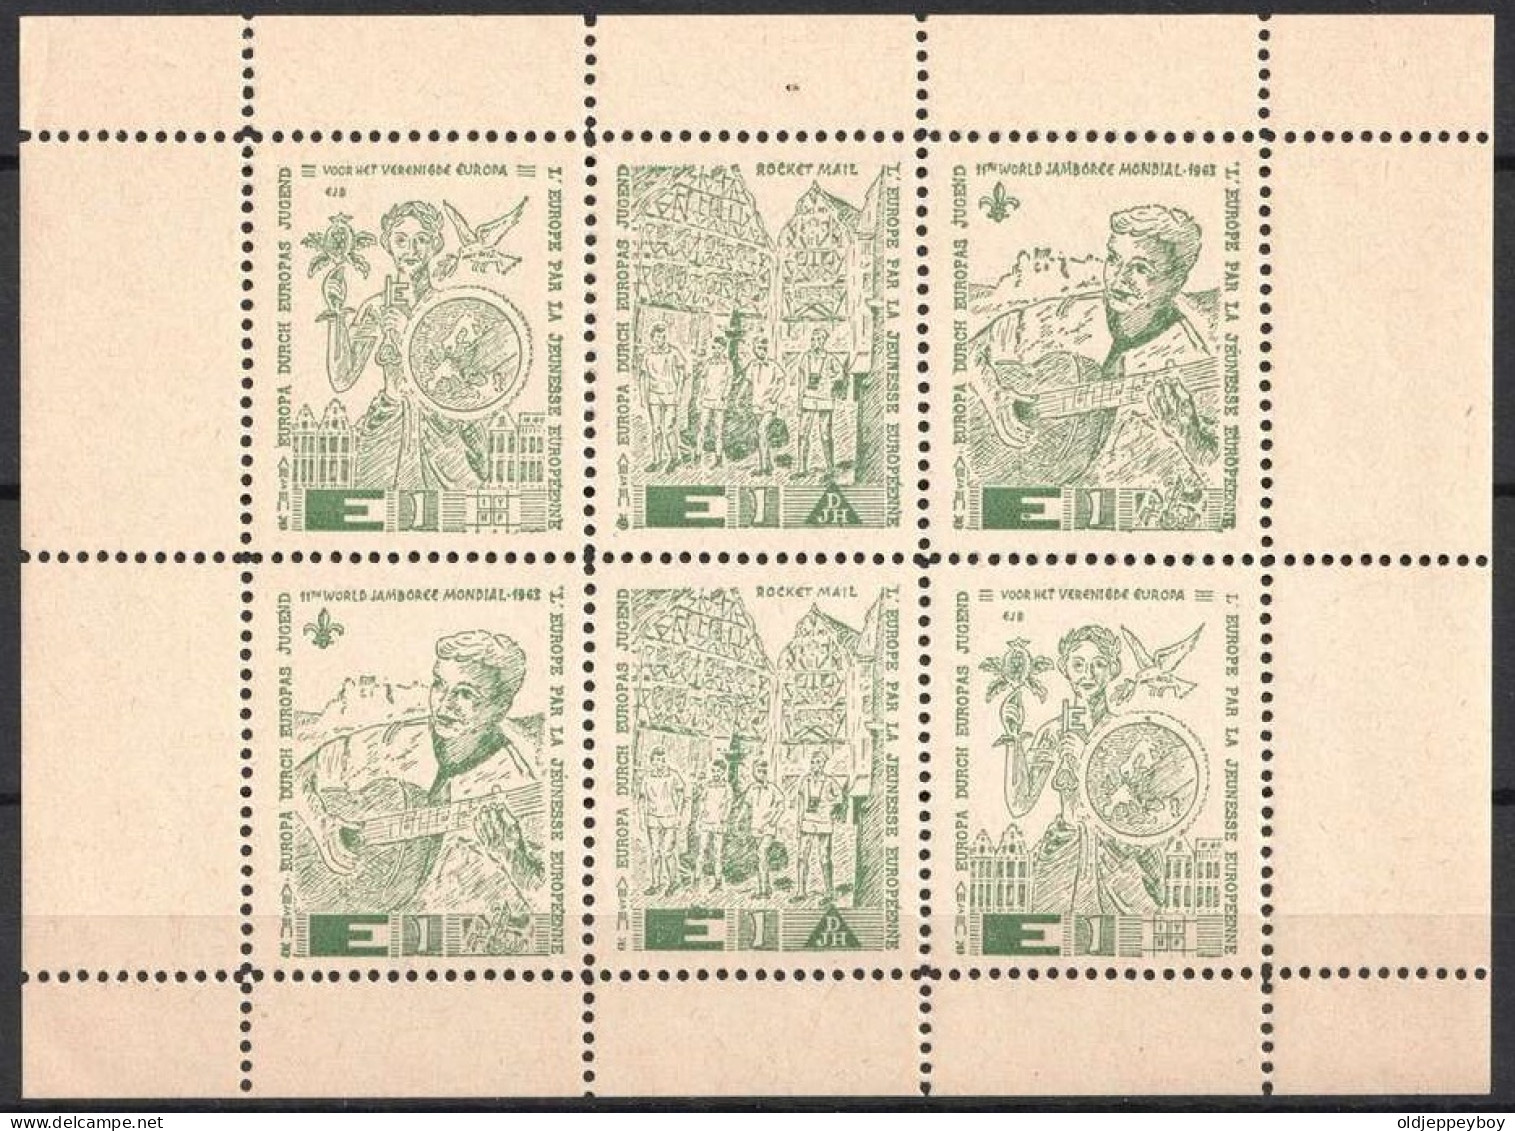 BLOCK Raketenpost Cinderellas Reklamemarke Rocket Mail EUROPAS JUGEND WORLD JAMBOREE MONDIAL 1963 SCOUTS SCOUTING  - Unused Stamps